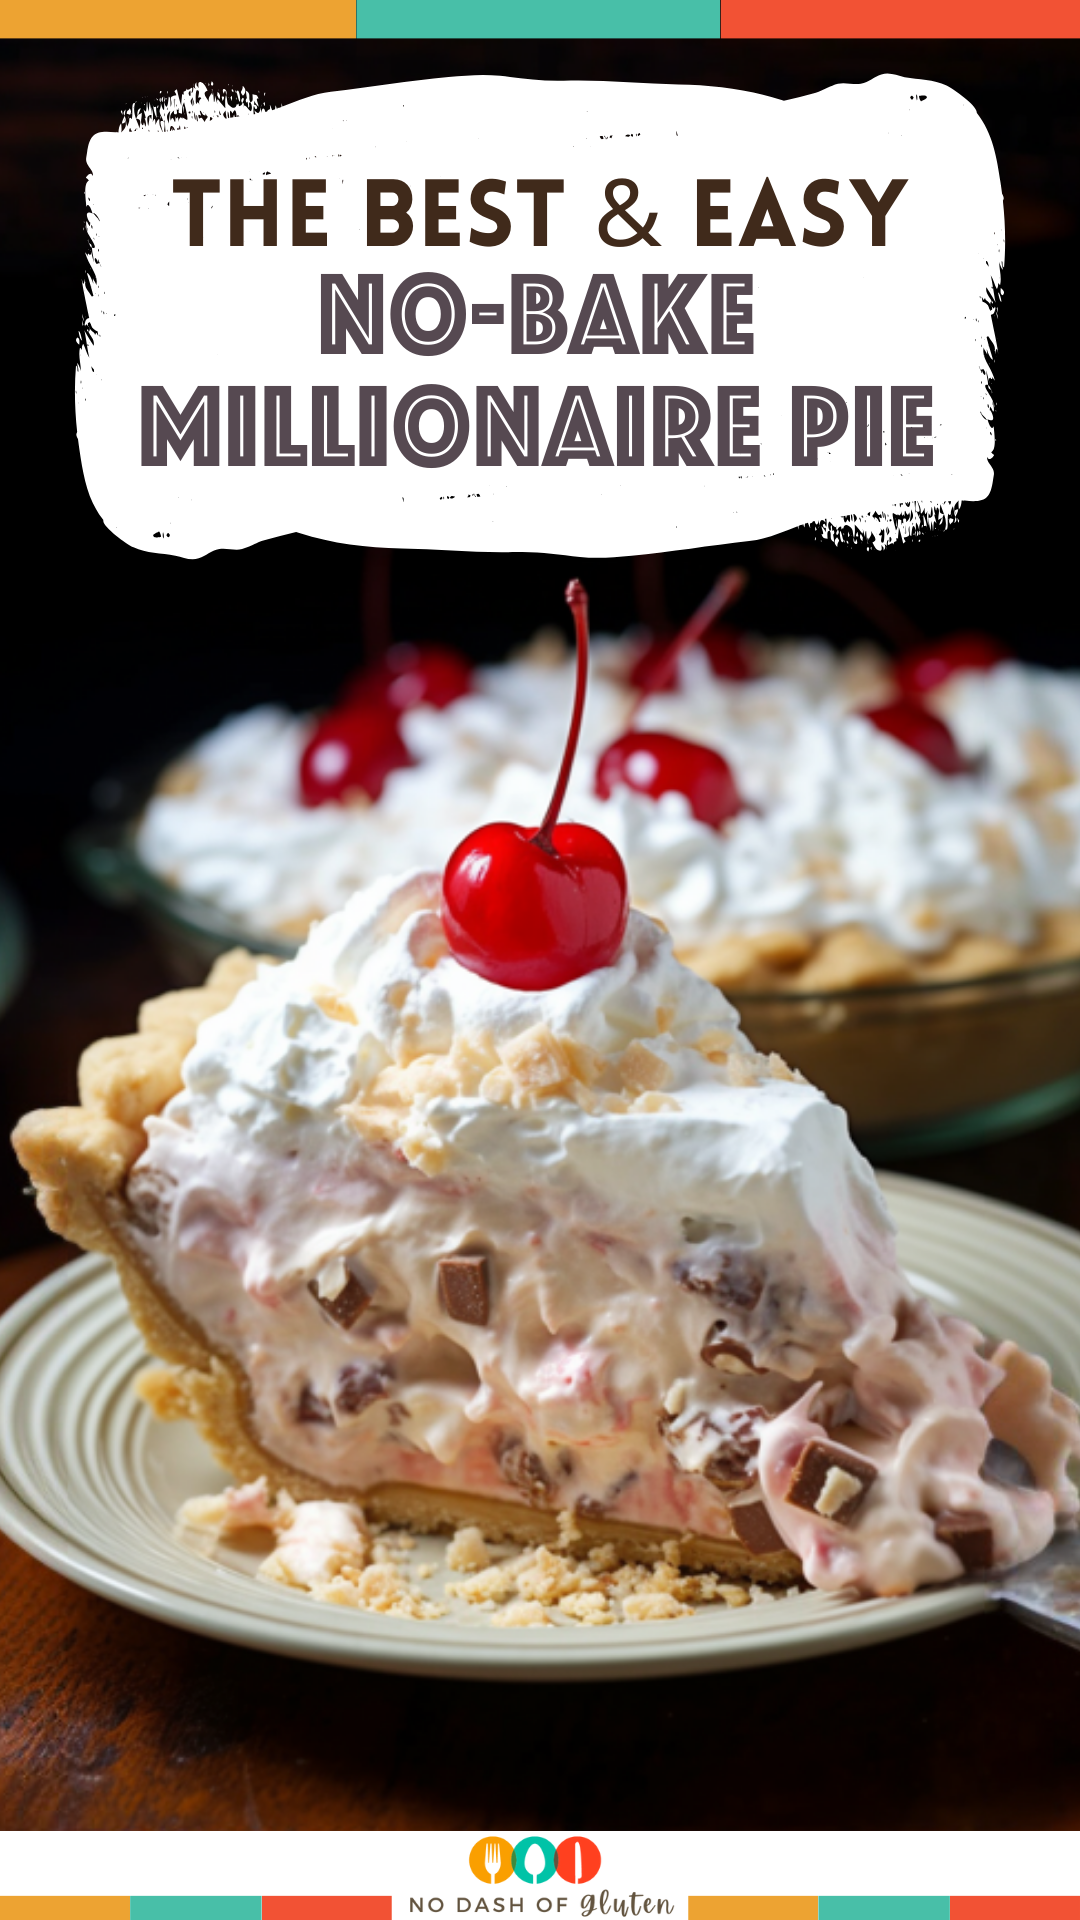 No-bake Millionaire pie